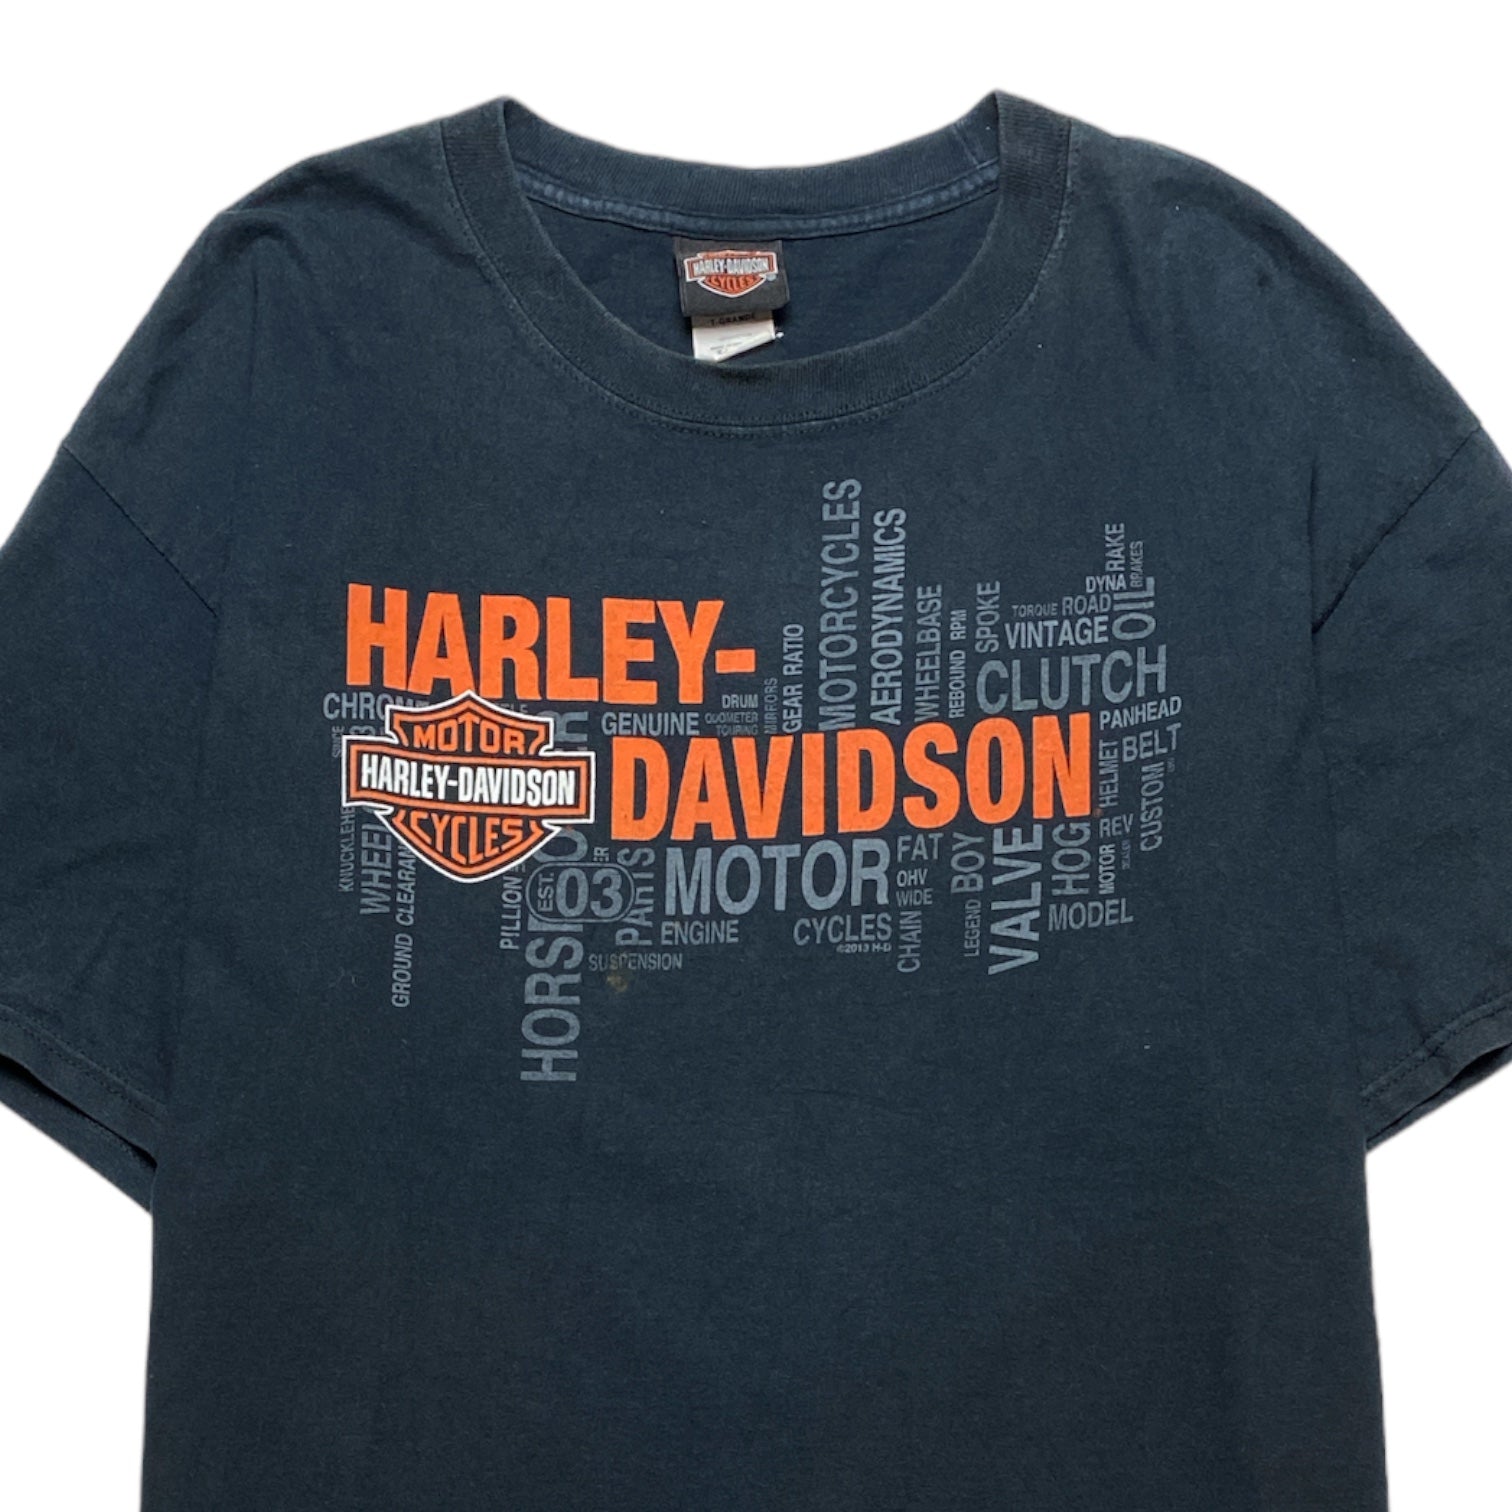 MOTOR HARLEY-DAVIDSON CYCLES Tee